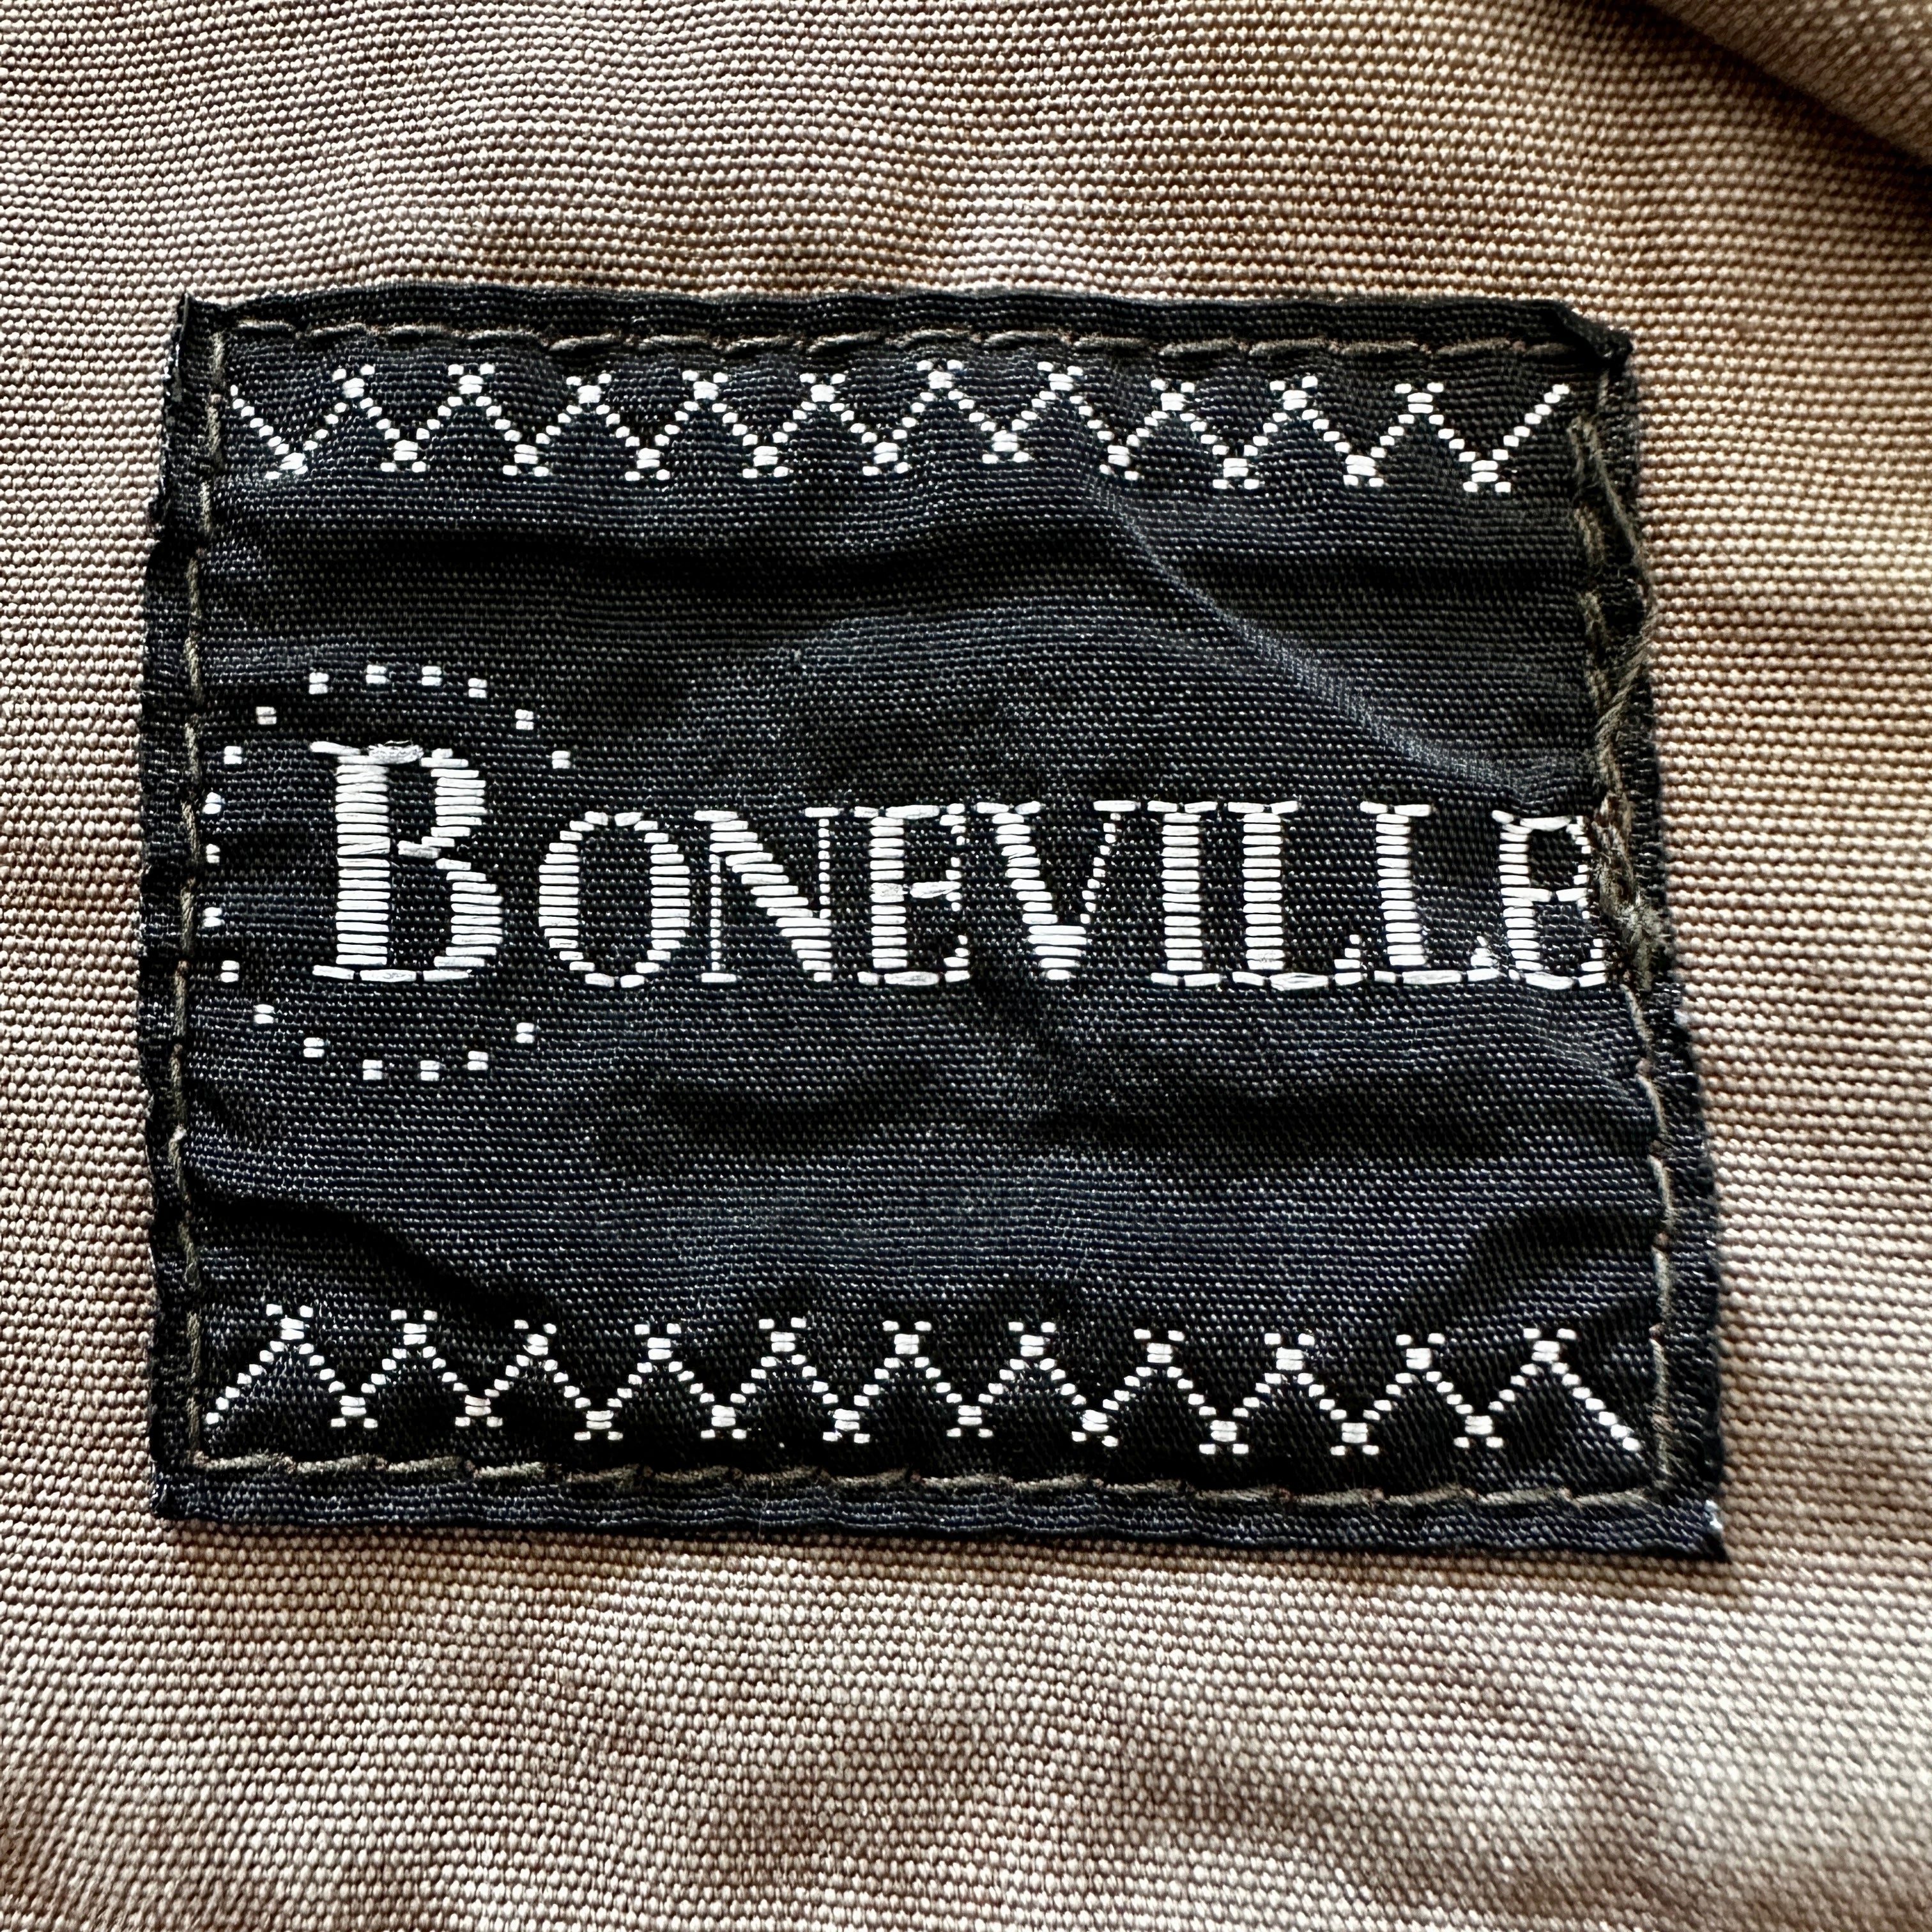 Boneville Vintage 80s Jacket - 44 / L - Made in Italy